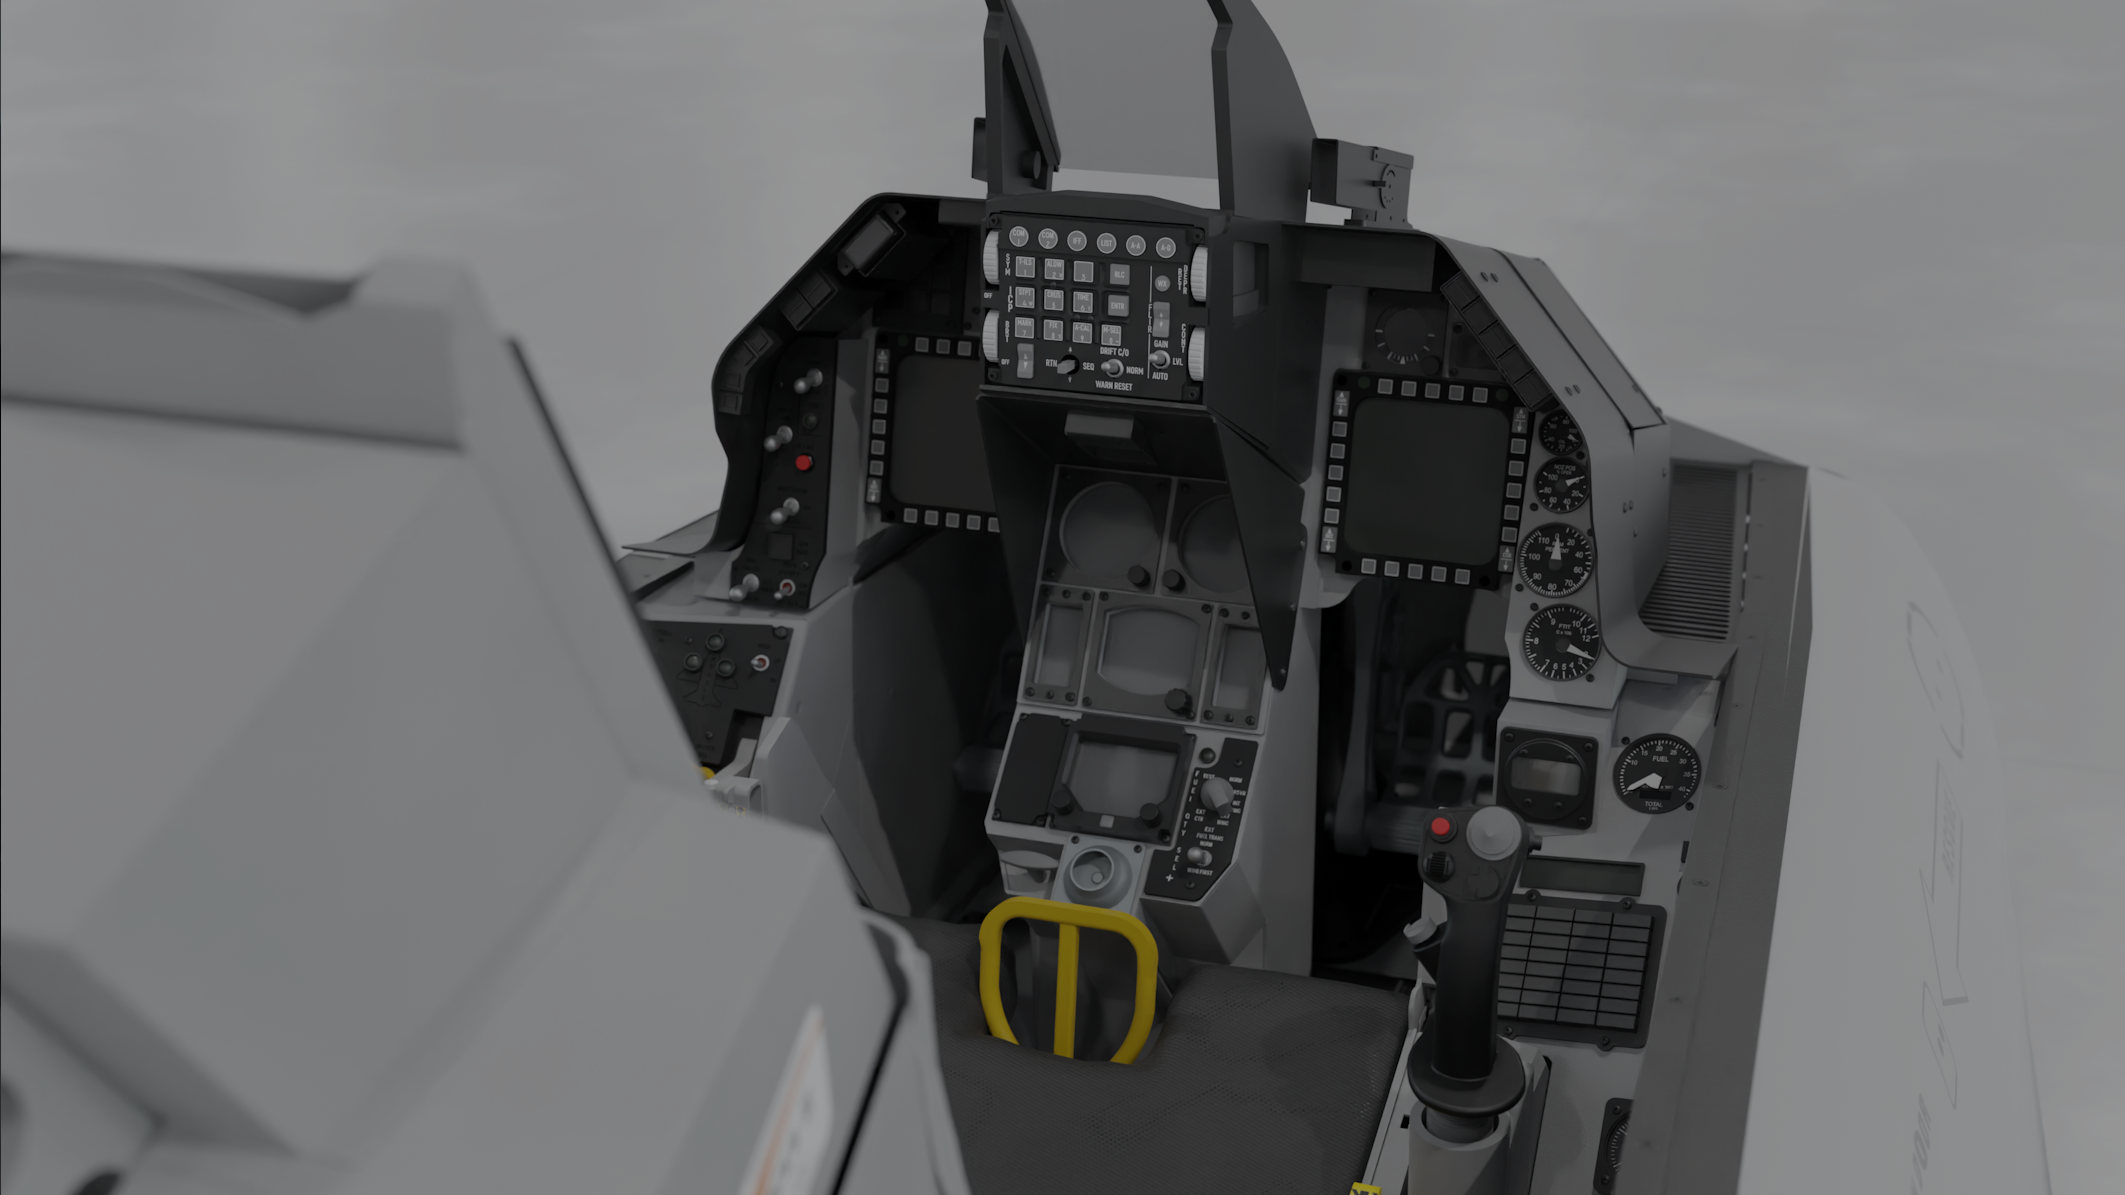 F-16 cockpit simulator, all-aluminum, modular, 360 view